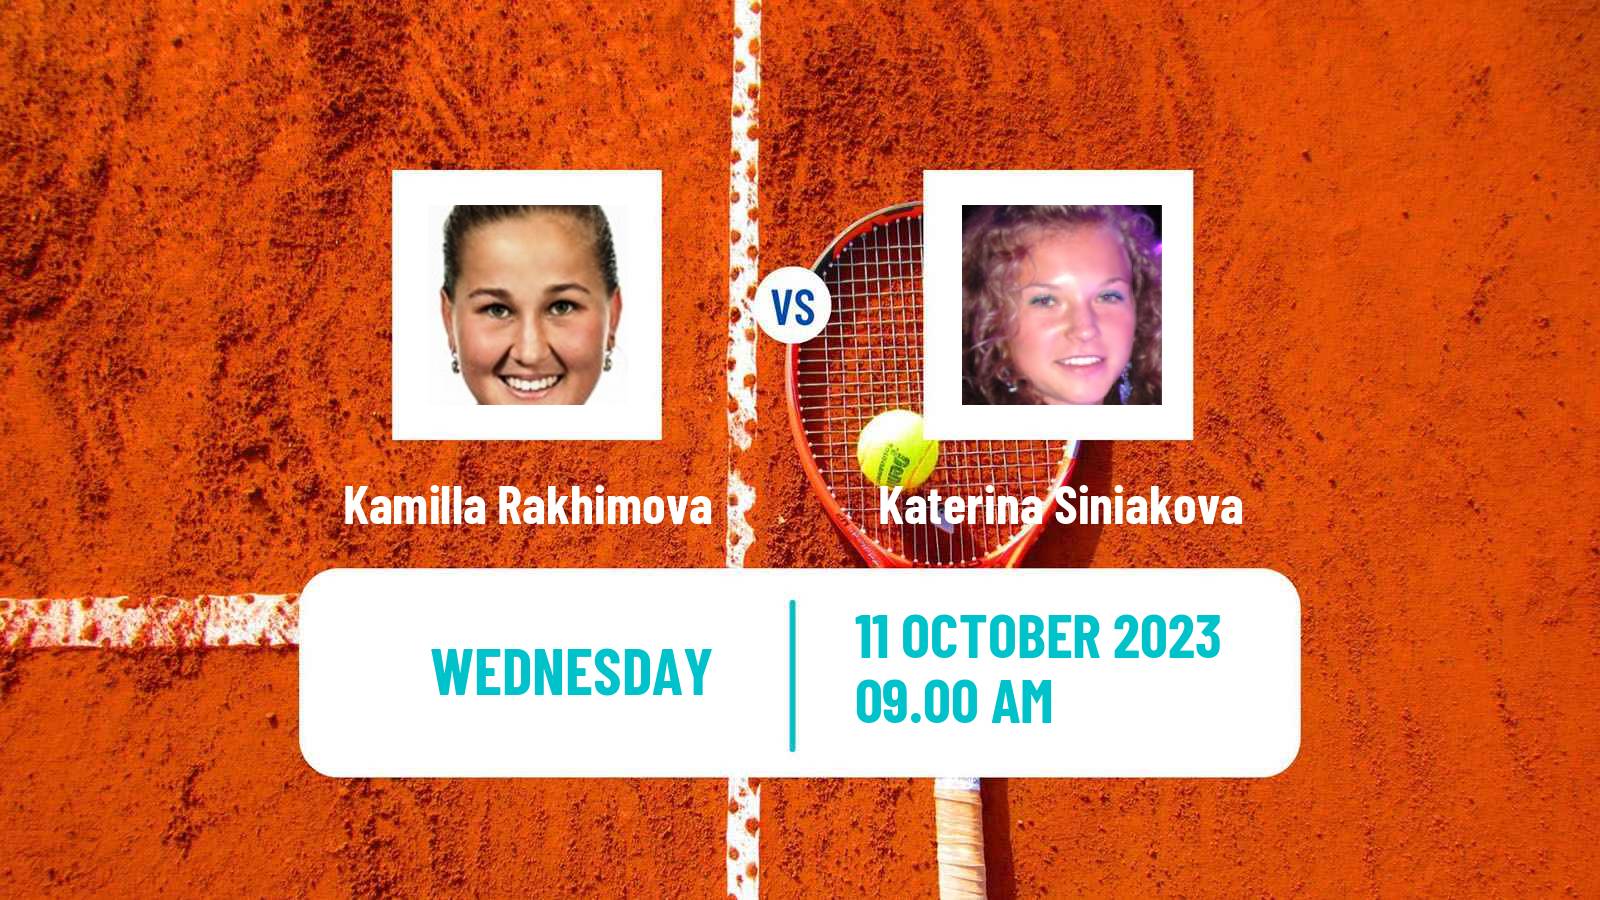 Tennis WTA Hong Kong Kamilla Rakhimova - Katerina Siniakova